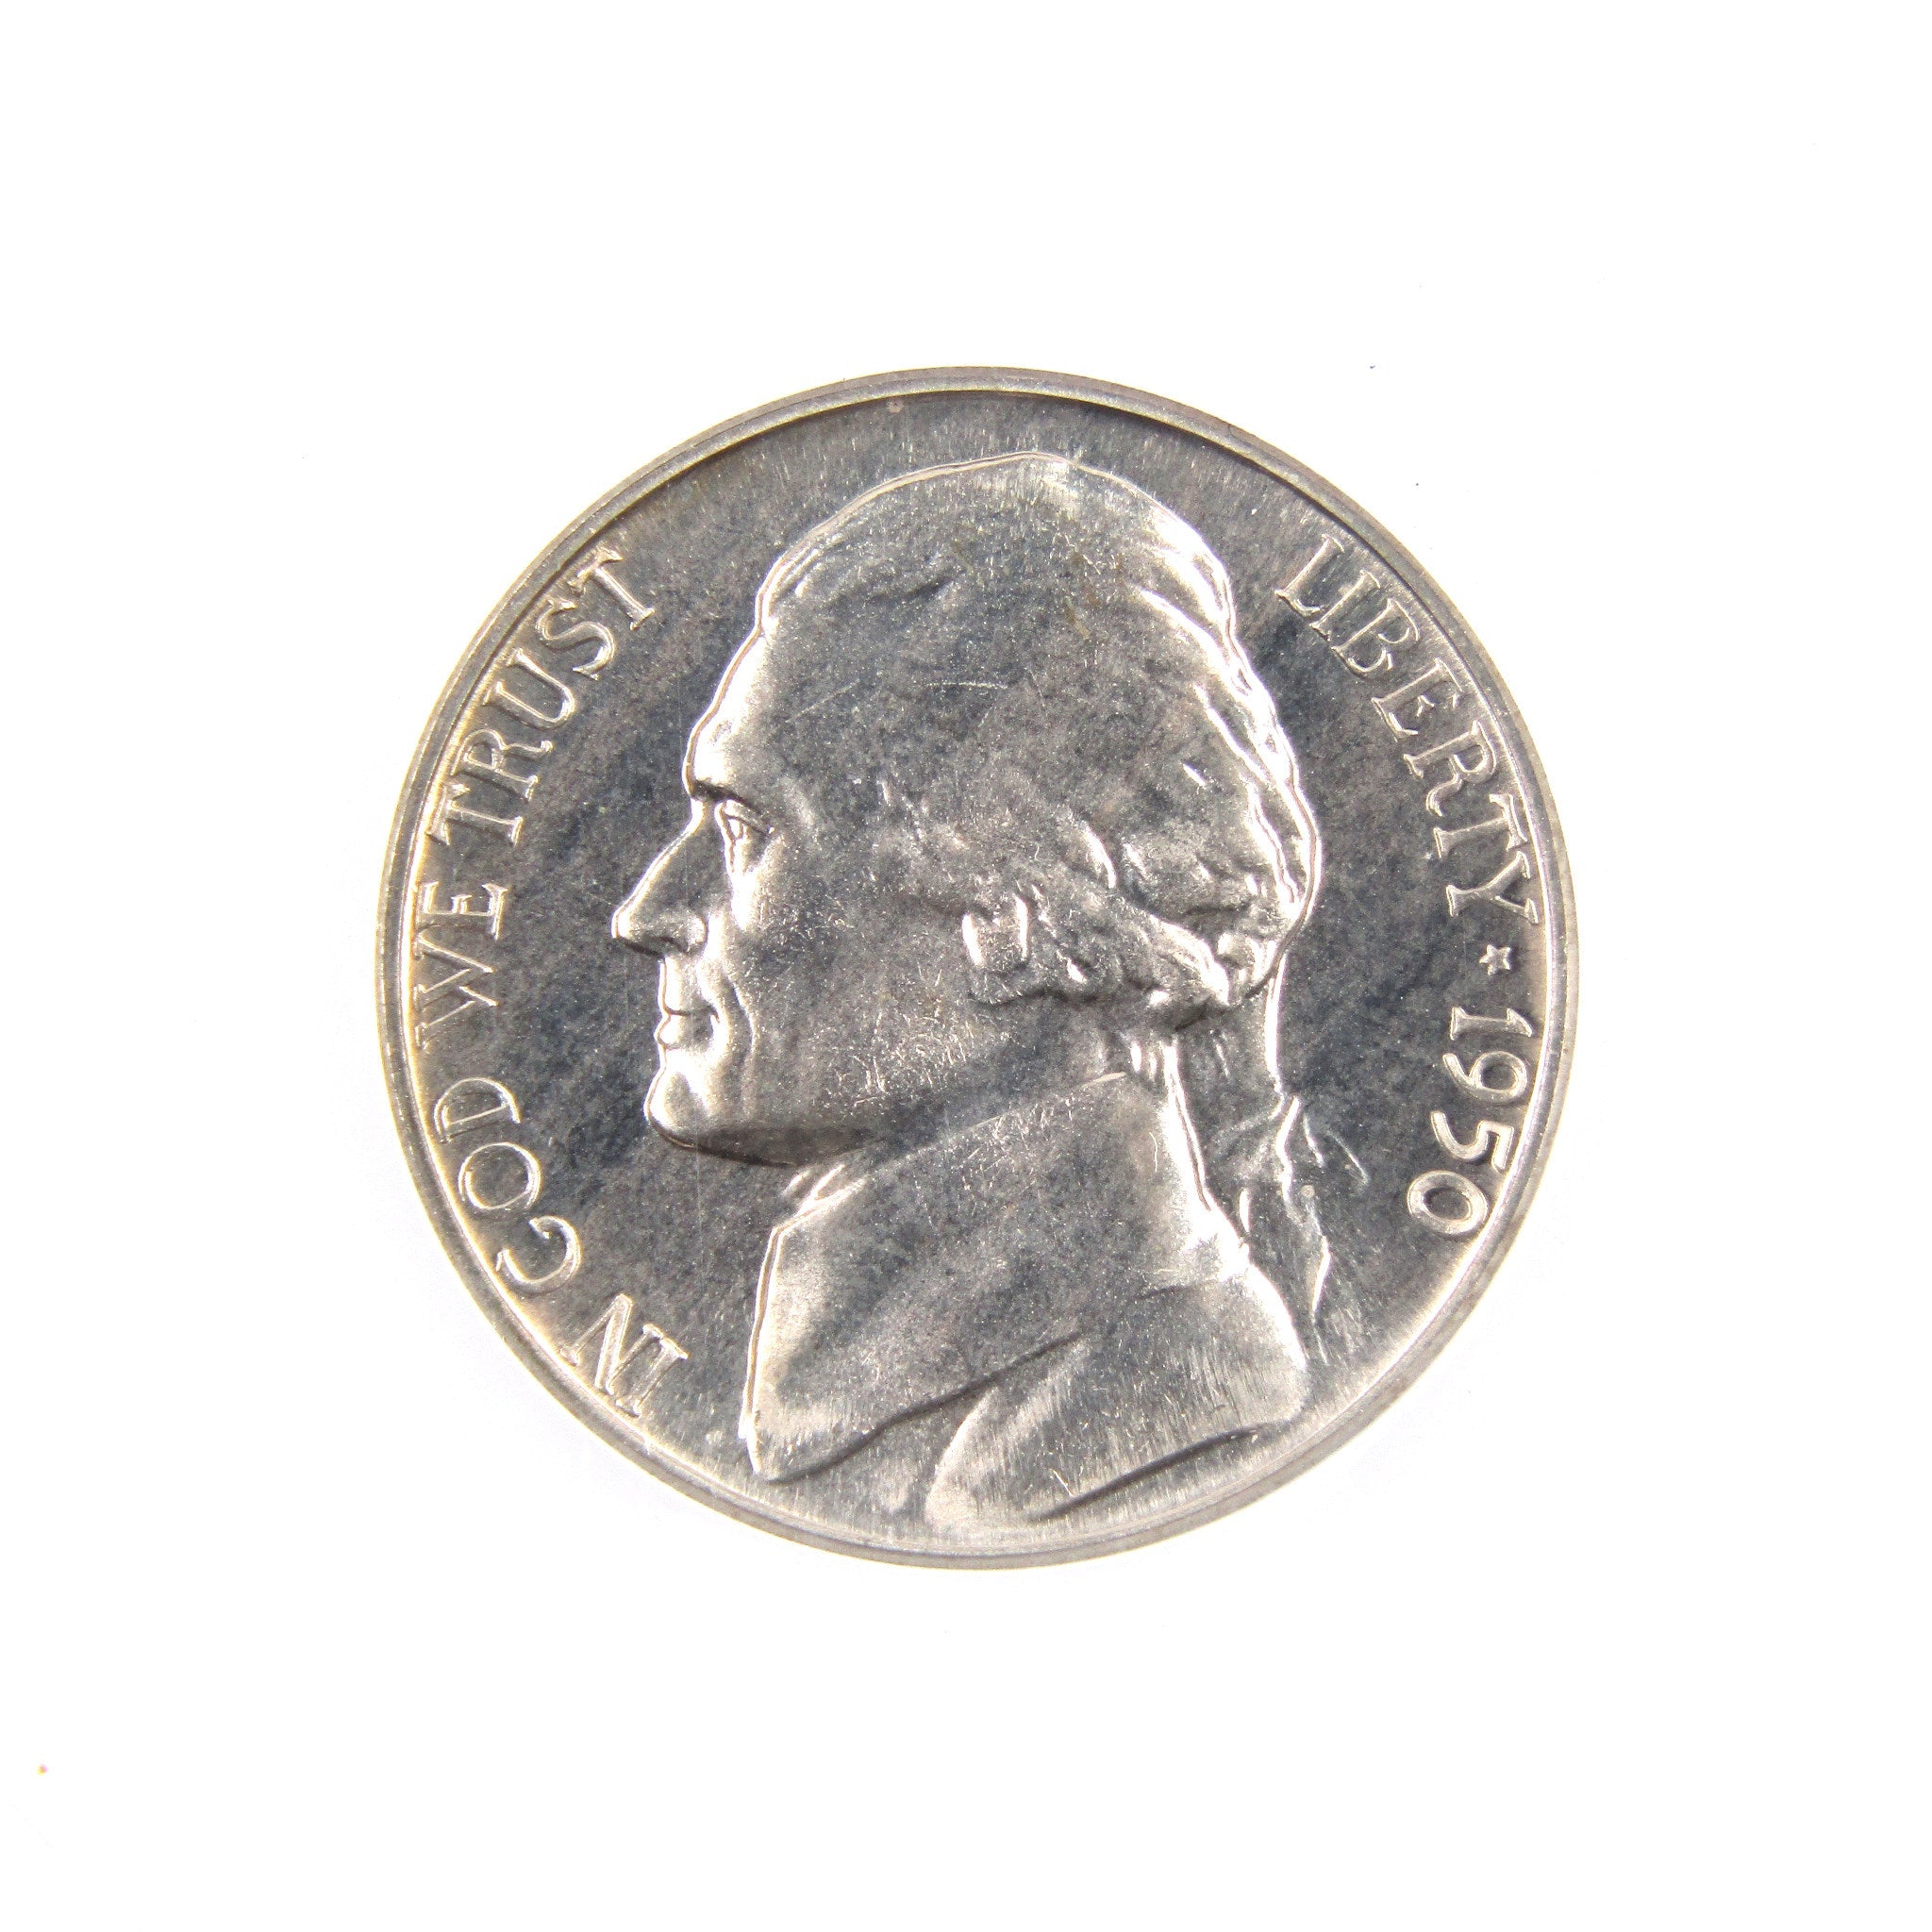 1950 Jefferson Nickel 5 Cent Piece PF 65 ANACS 5c Proof SKU:CPC2269